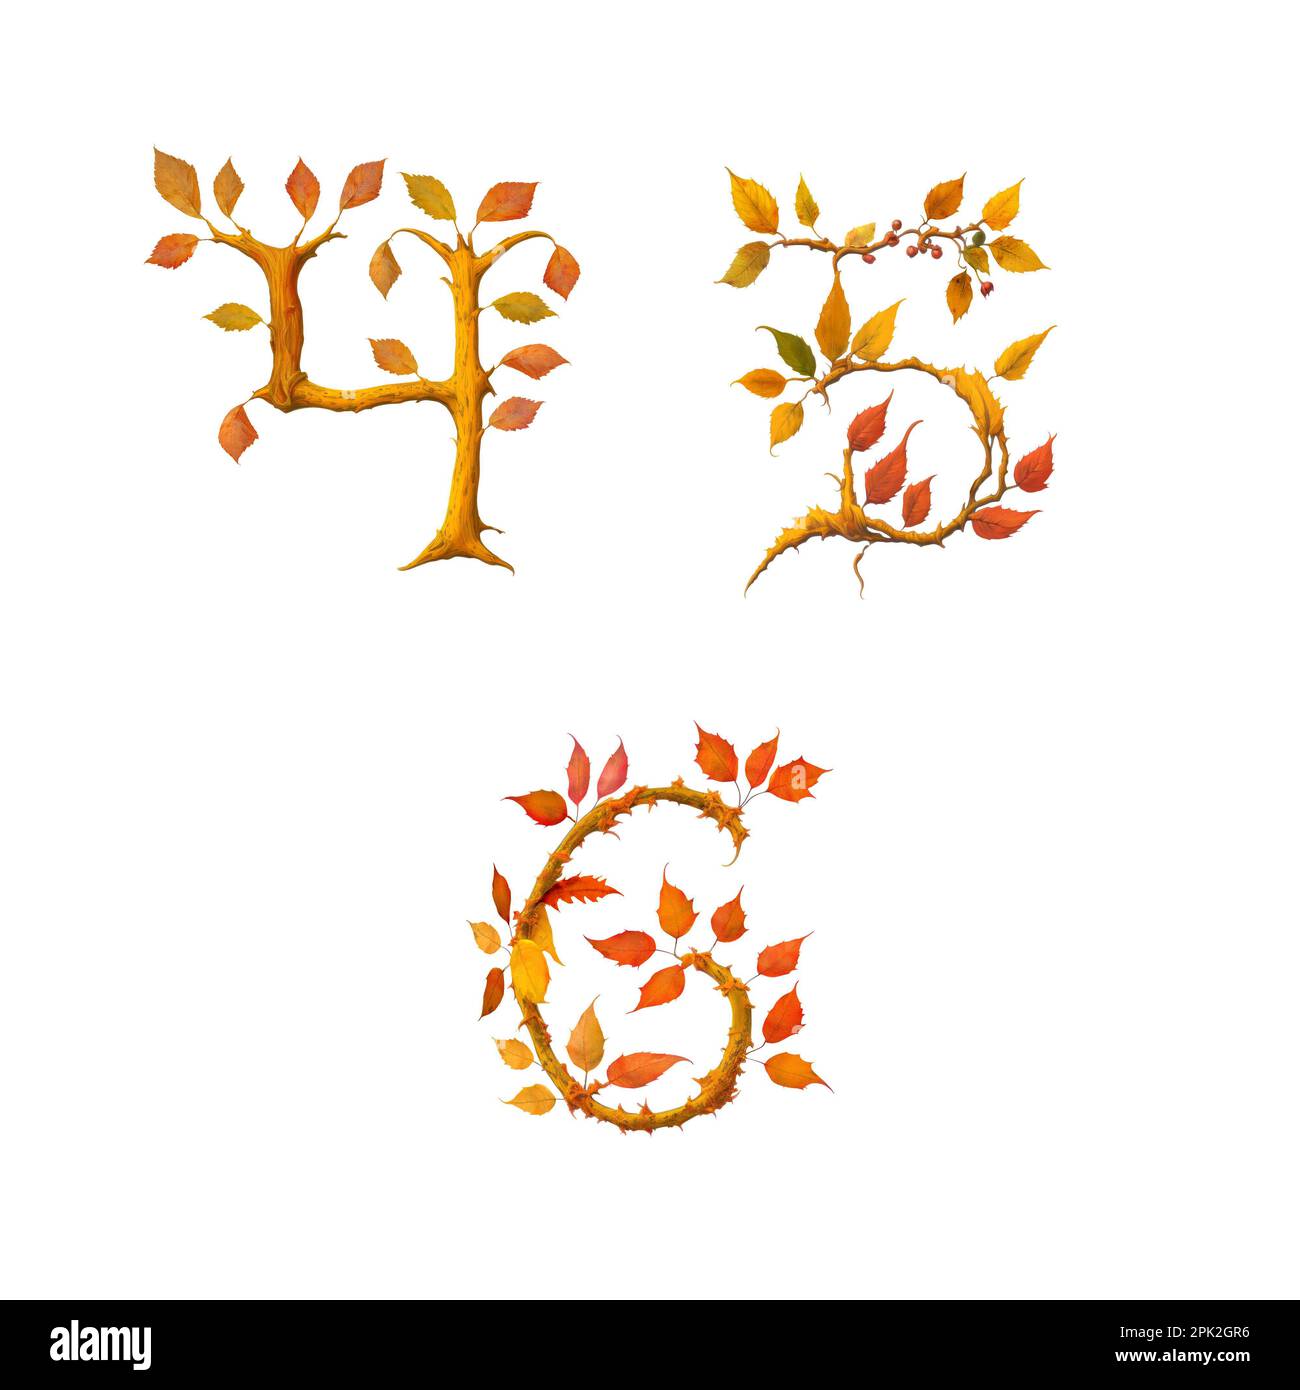 3D illustration of stylized autumn leaf tree alphabet - digits 4-6 Stock Photo